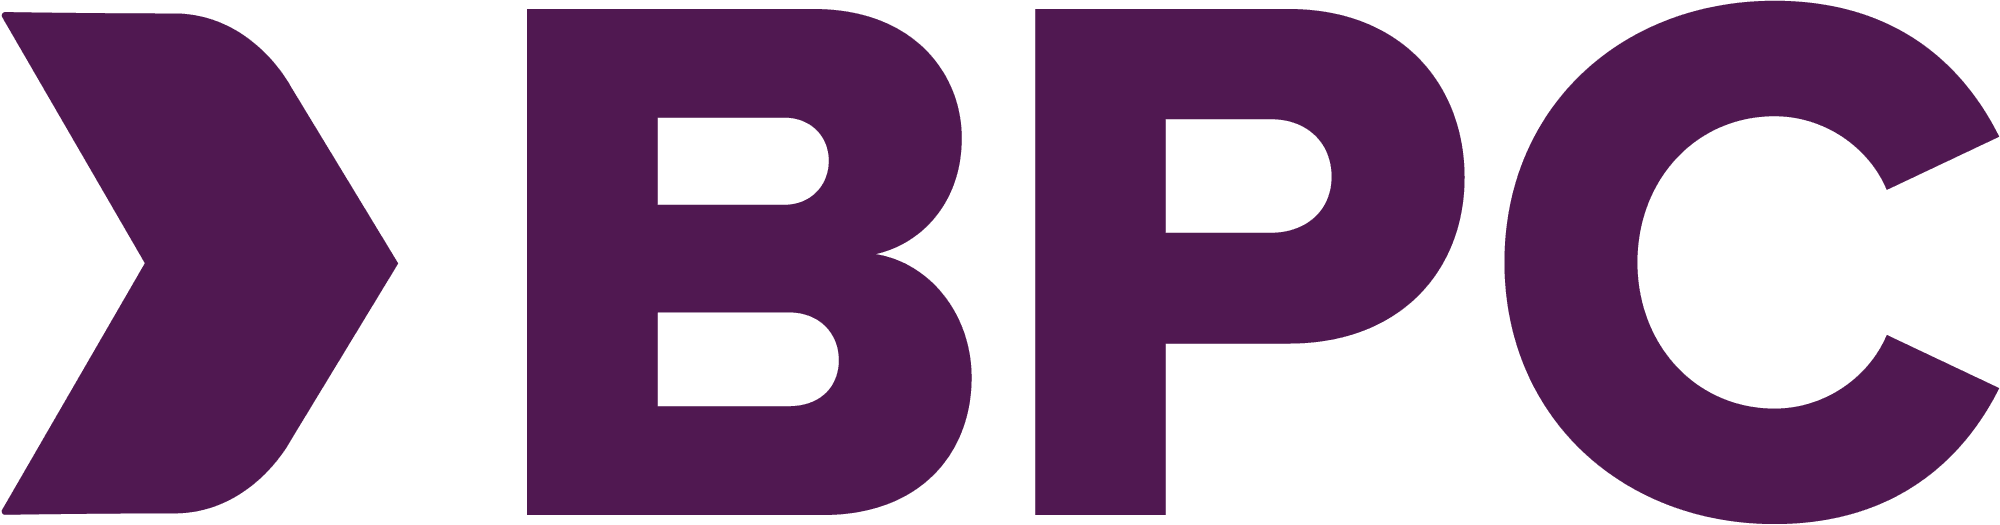 bpc-logo-2000x525-—-копия-3